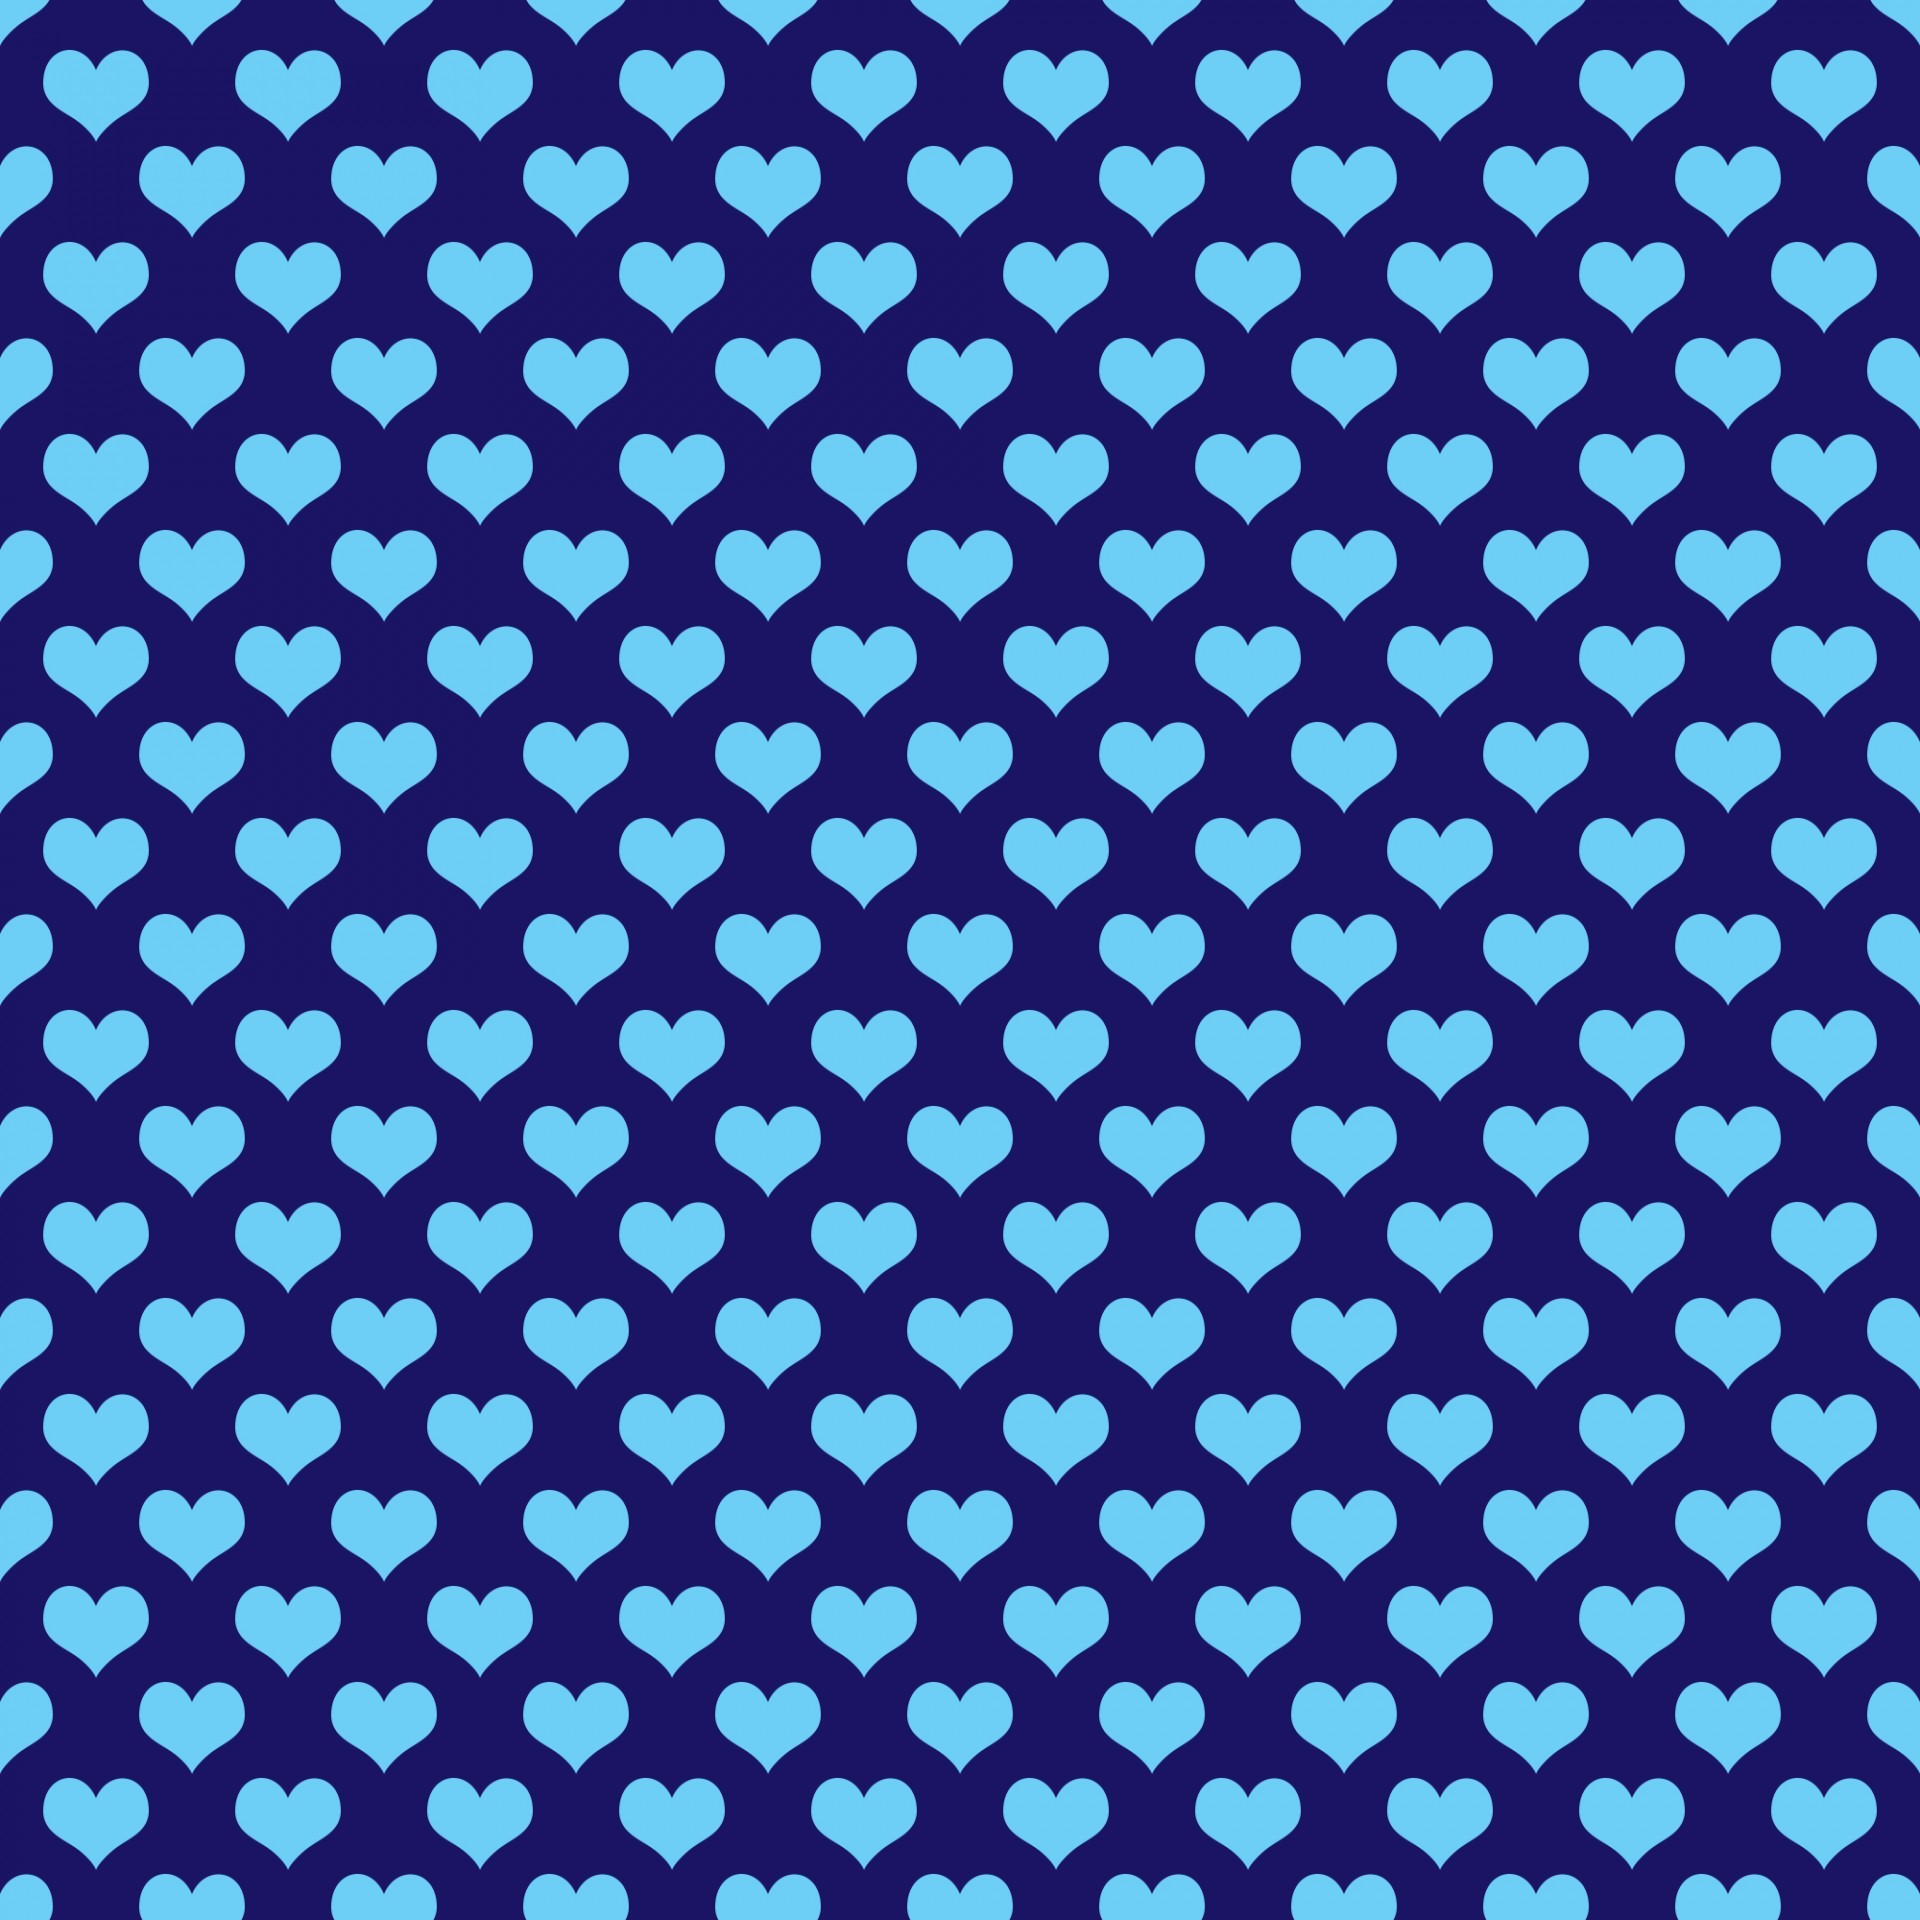 1920x1920 View Original: Hearts-Background-Wallpaper-Blue.jpg ()